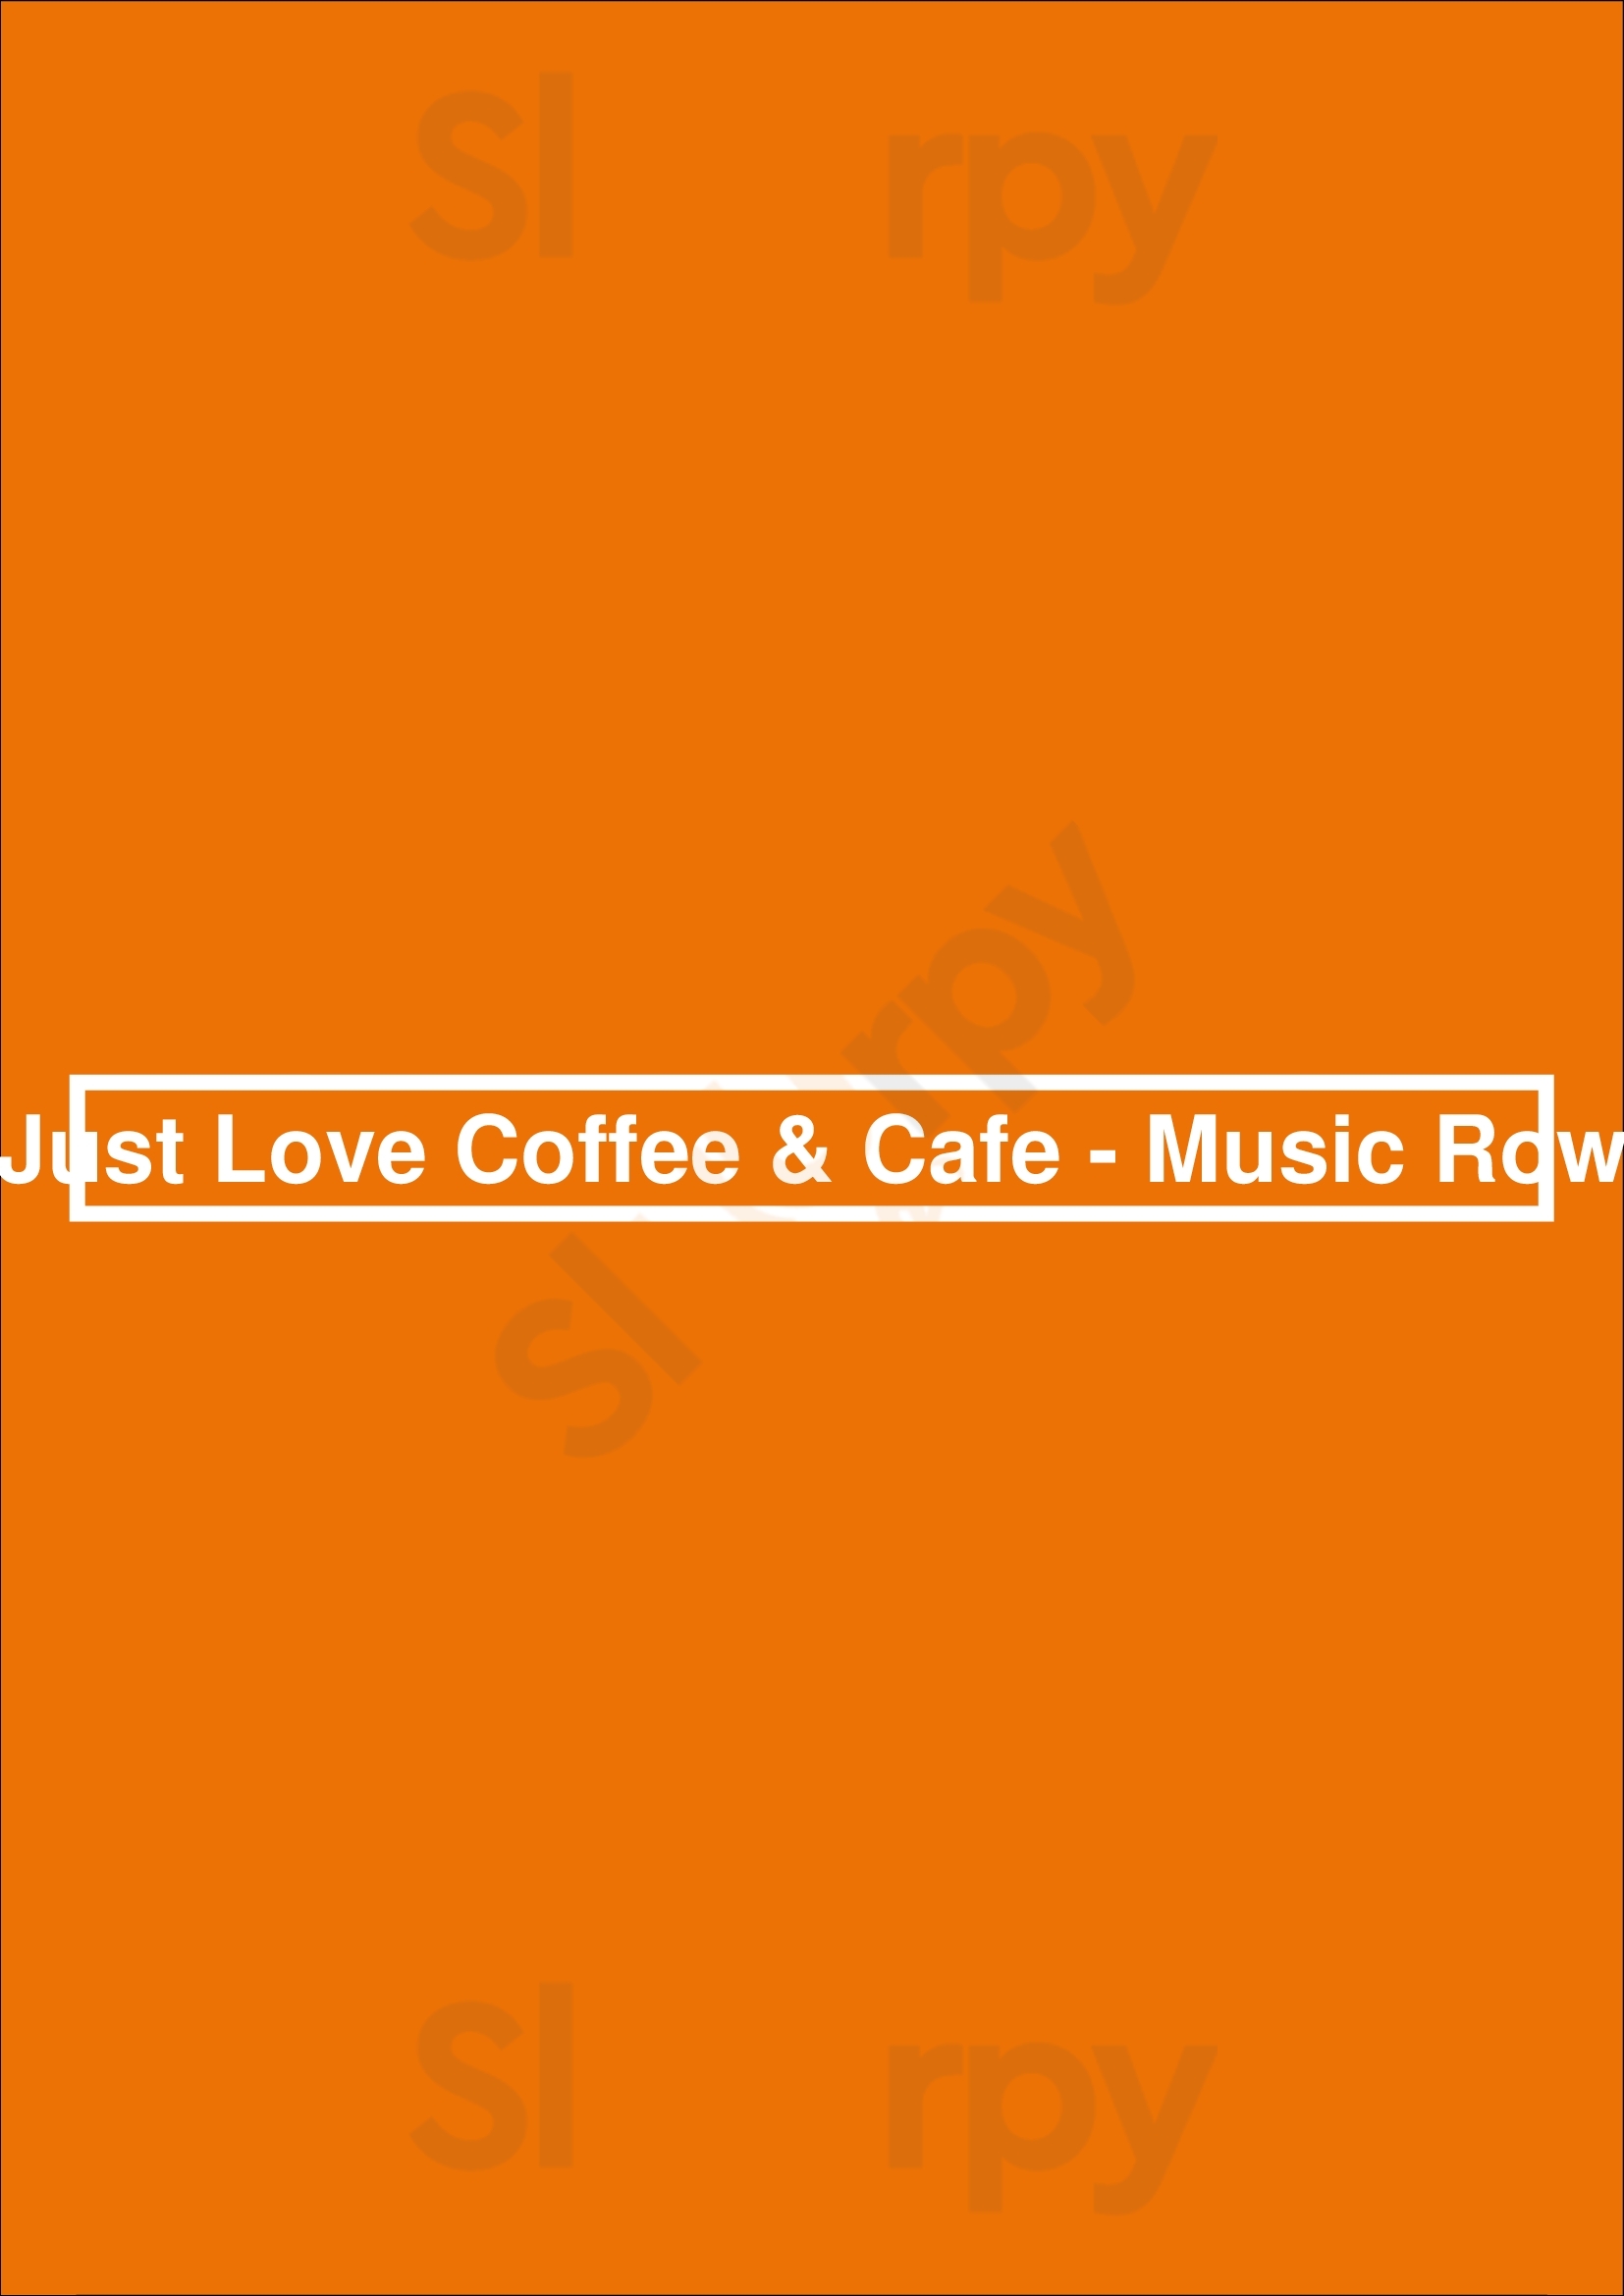 Just Love Coffee Cafe - Music Row Nashville Menu - 1